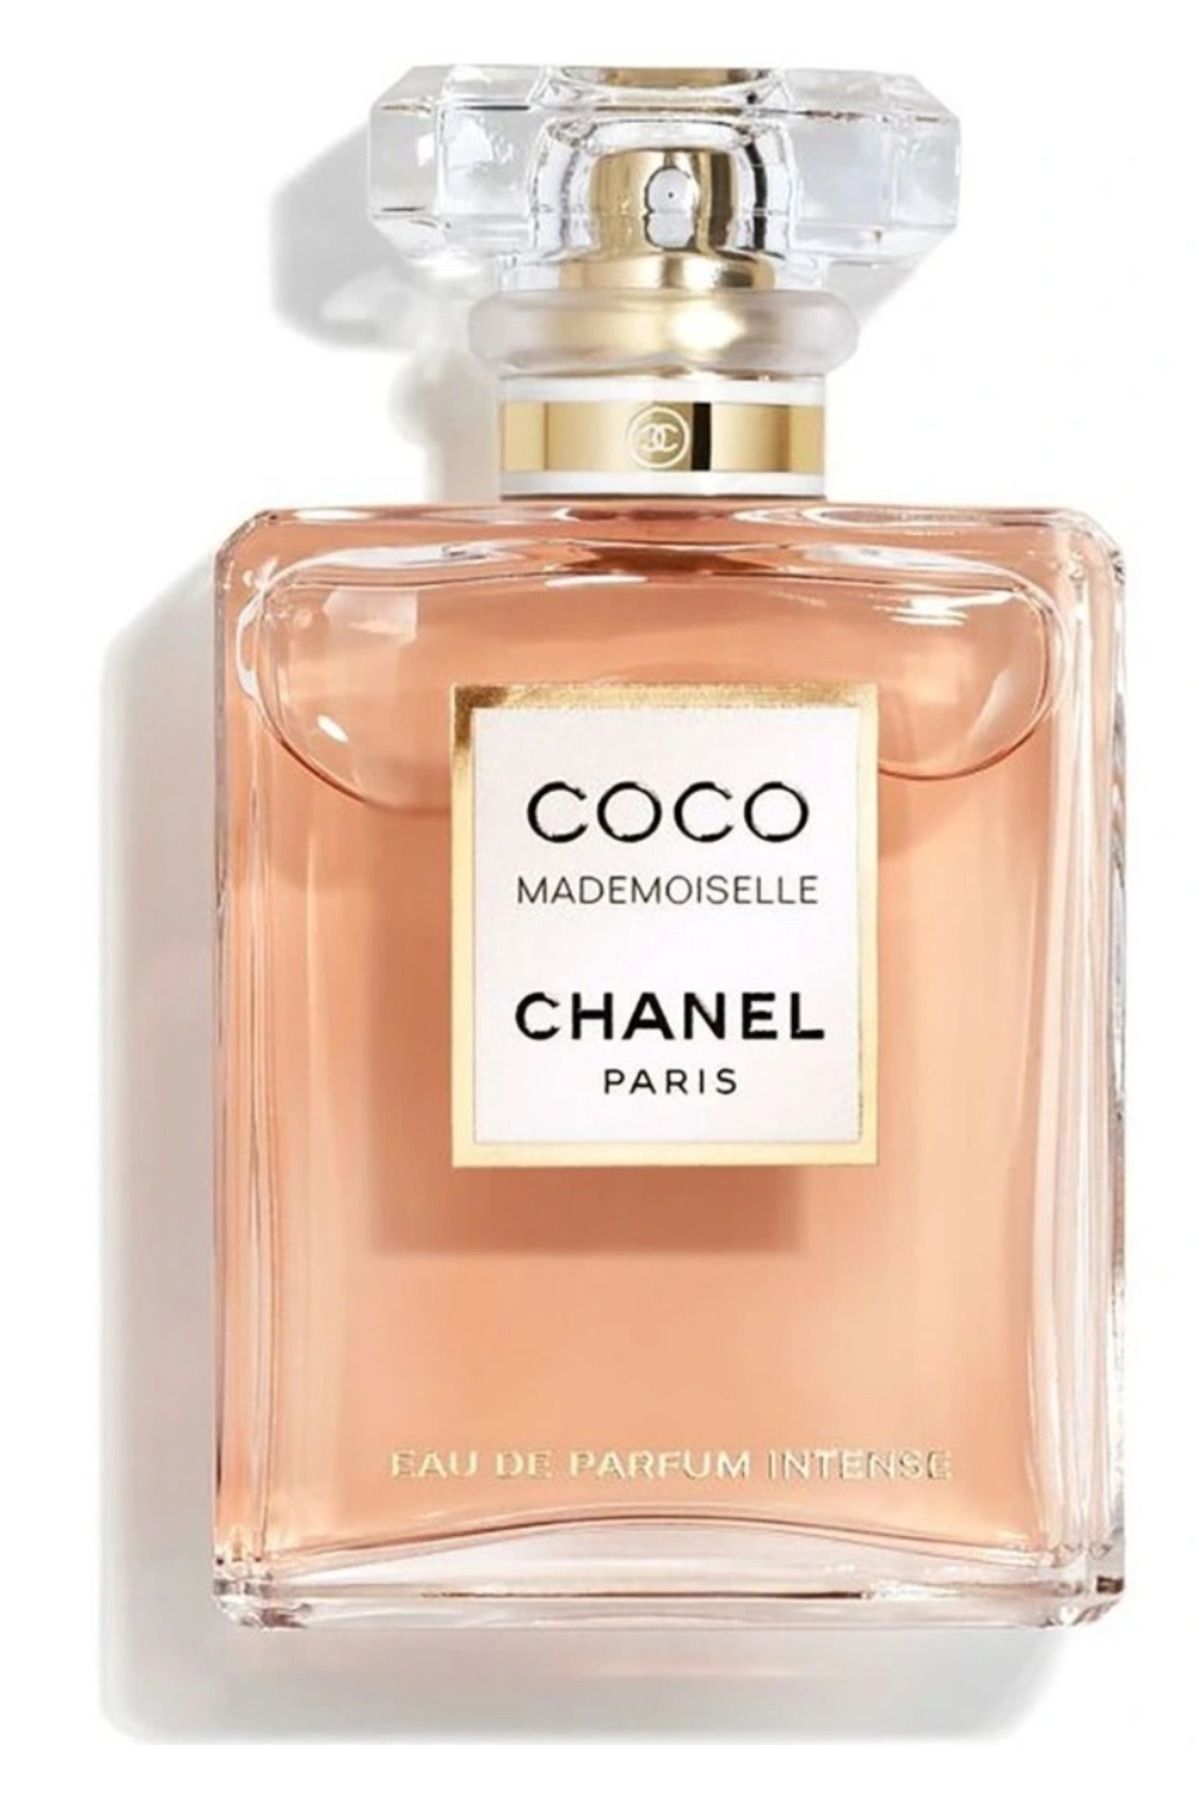 Chanel Coco Mademoıselle Eau de Parfum Intense 200 Ml